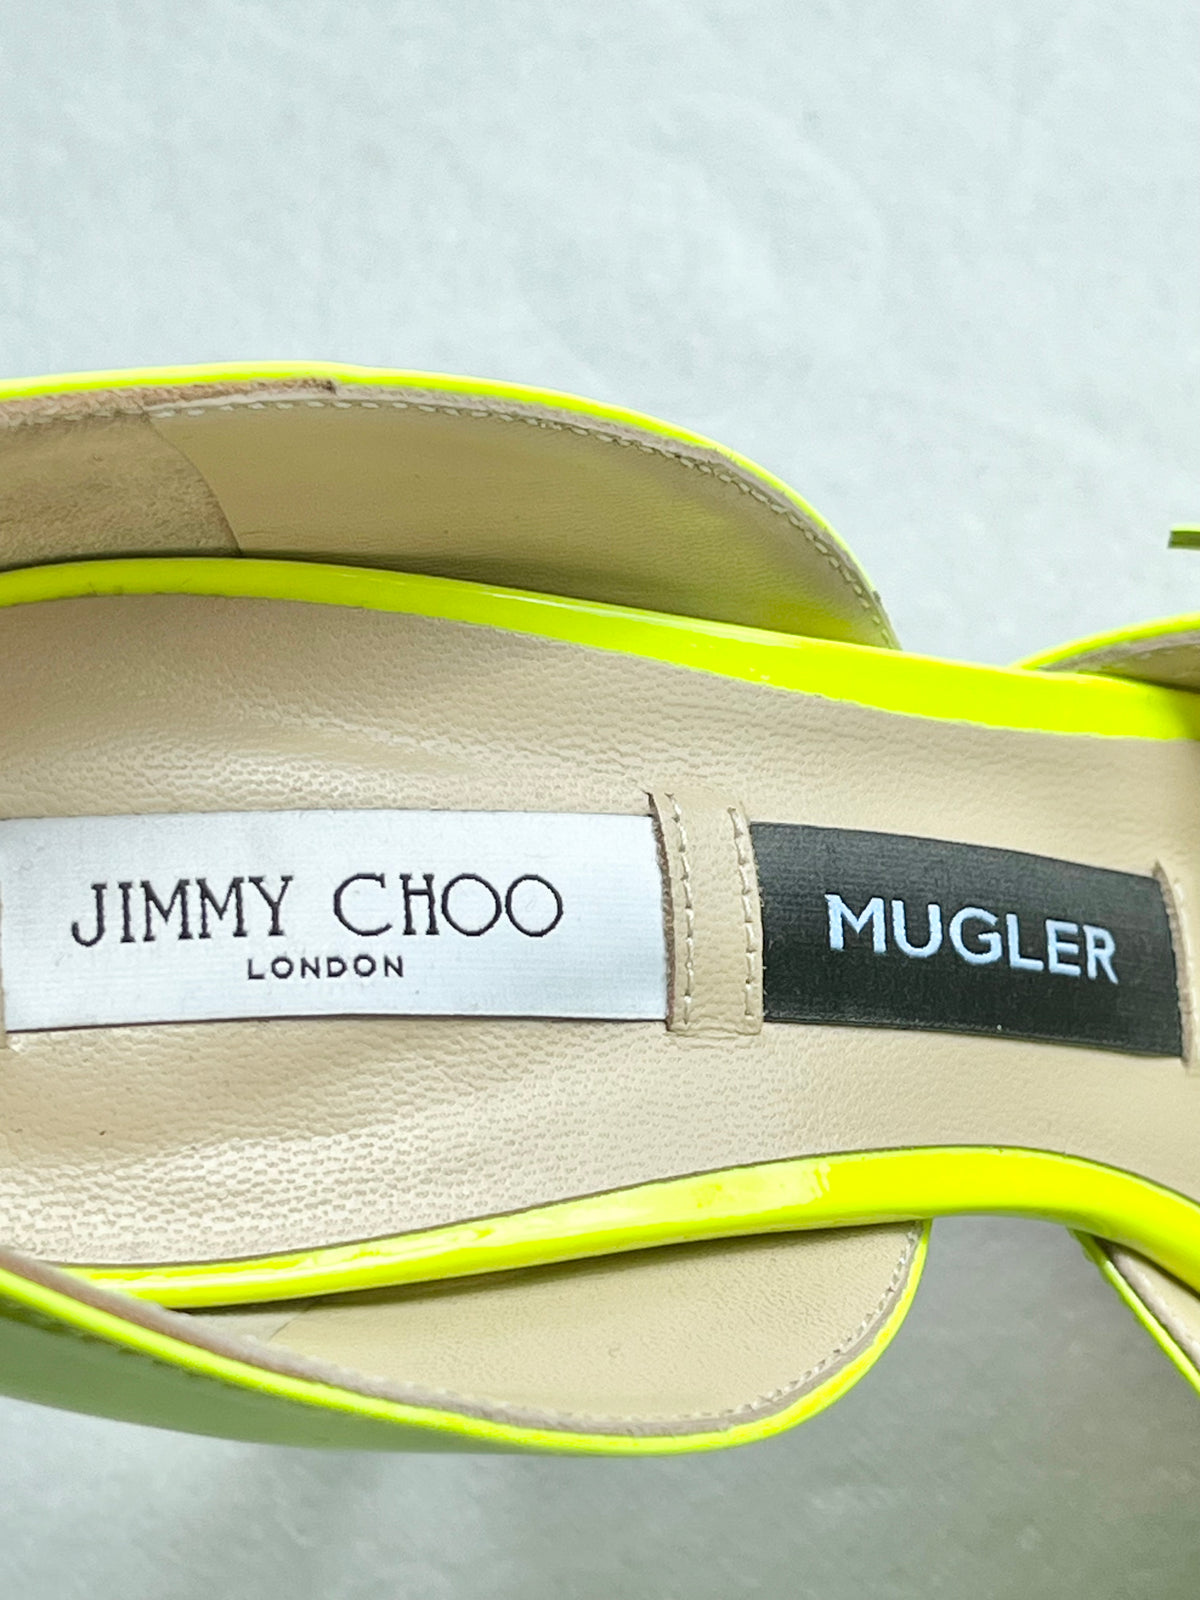 Jimmy Choo X Mugler Yellow Patent Leather Pump Heels SZ 39.5